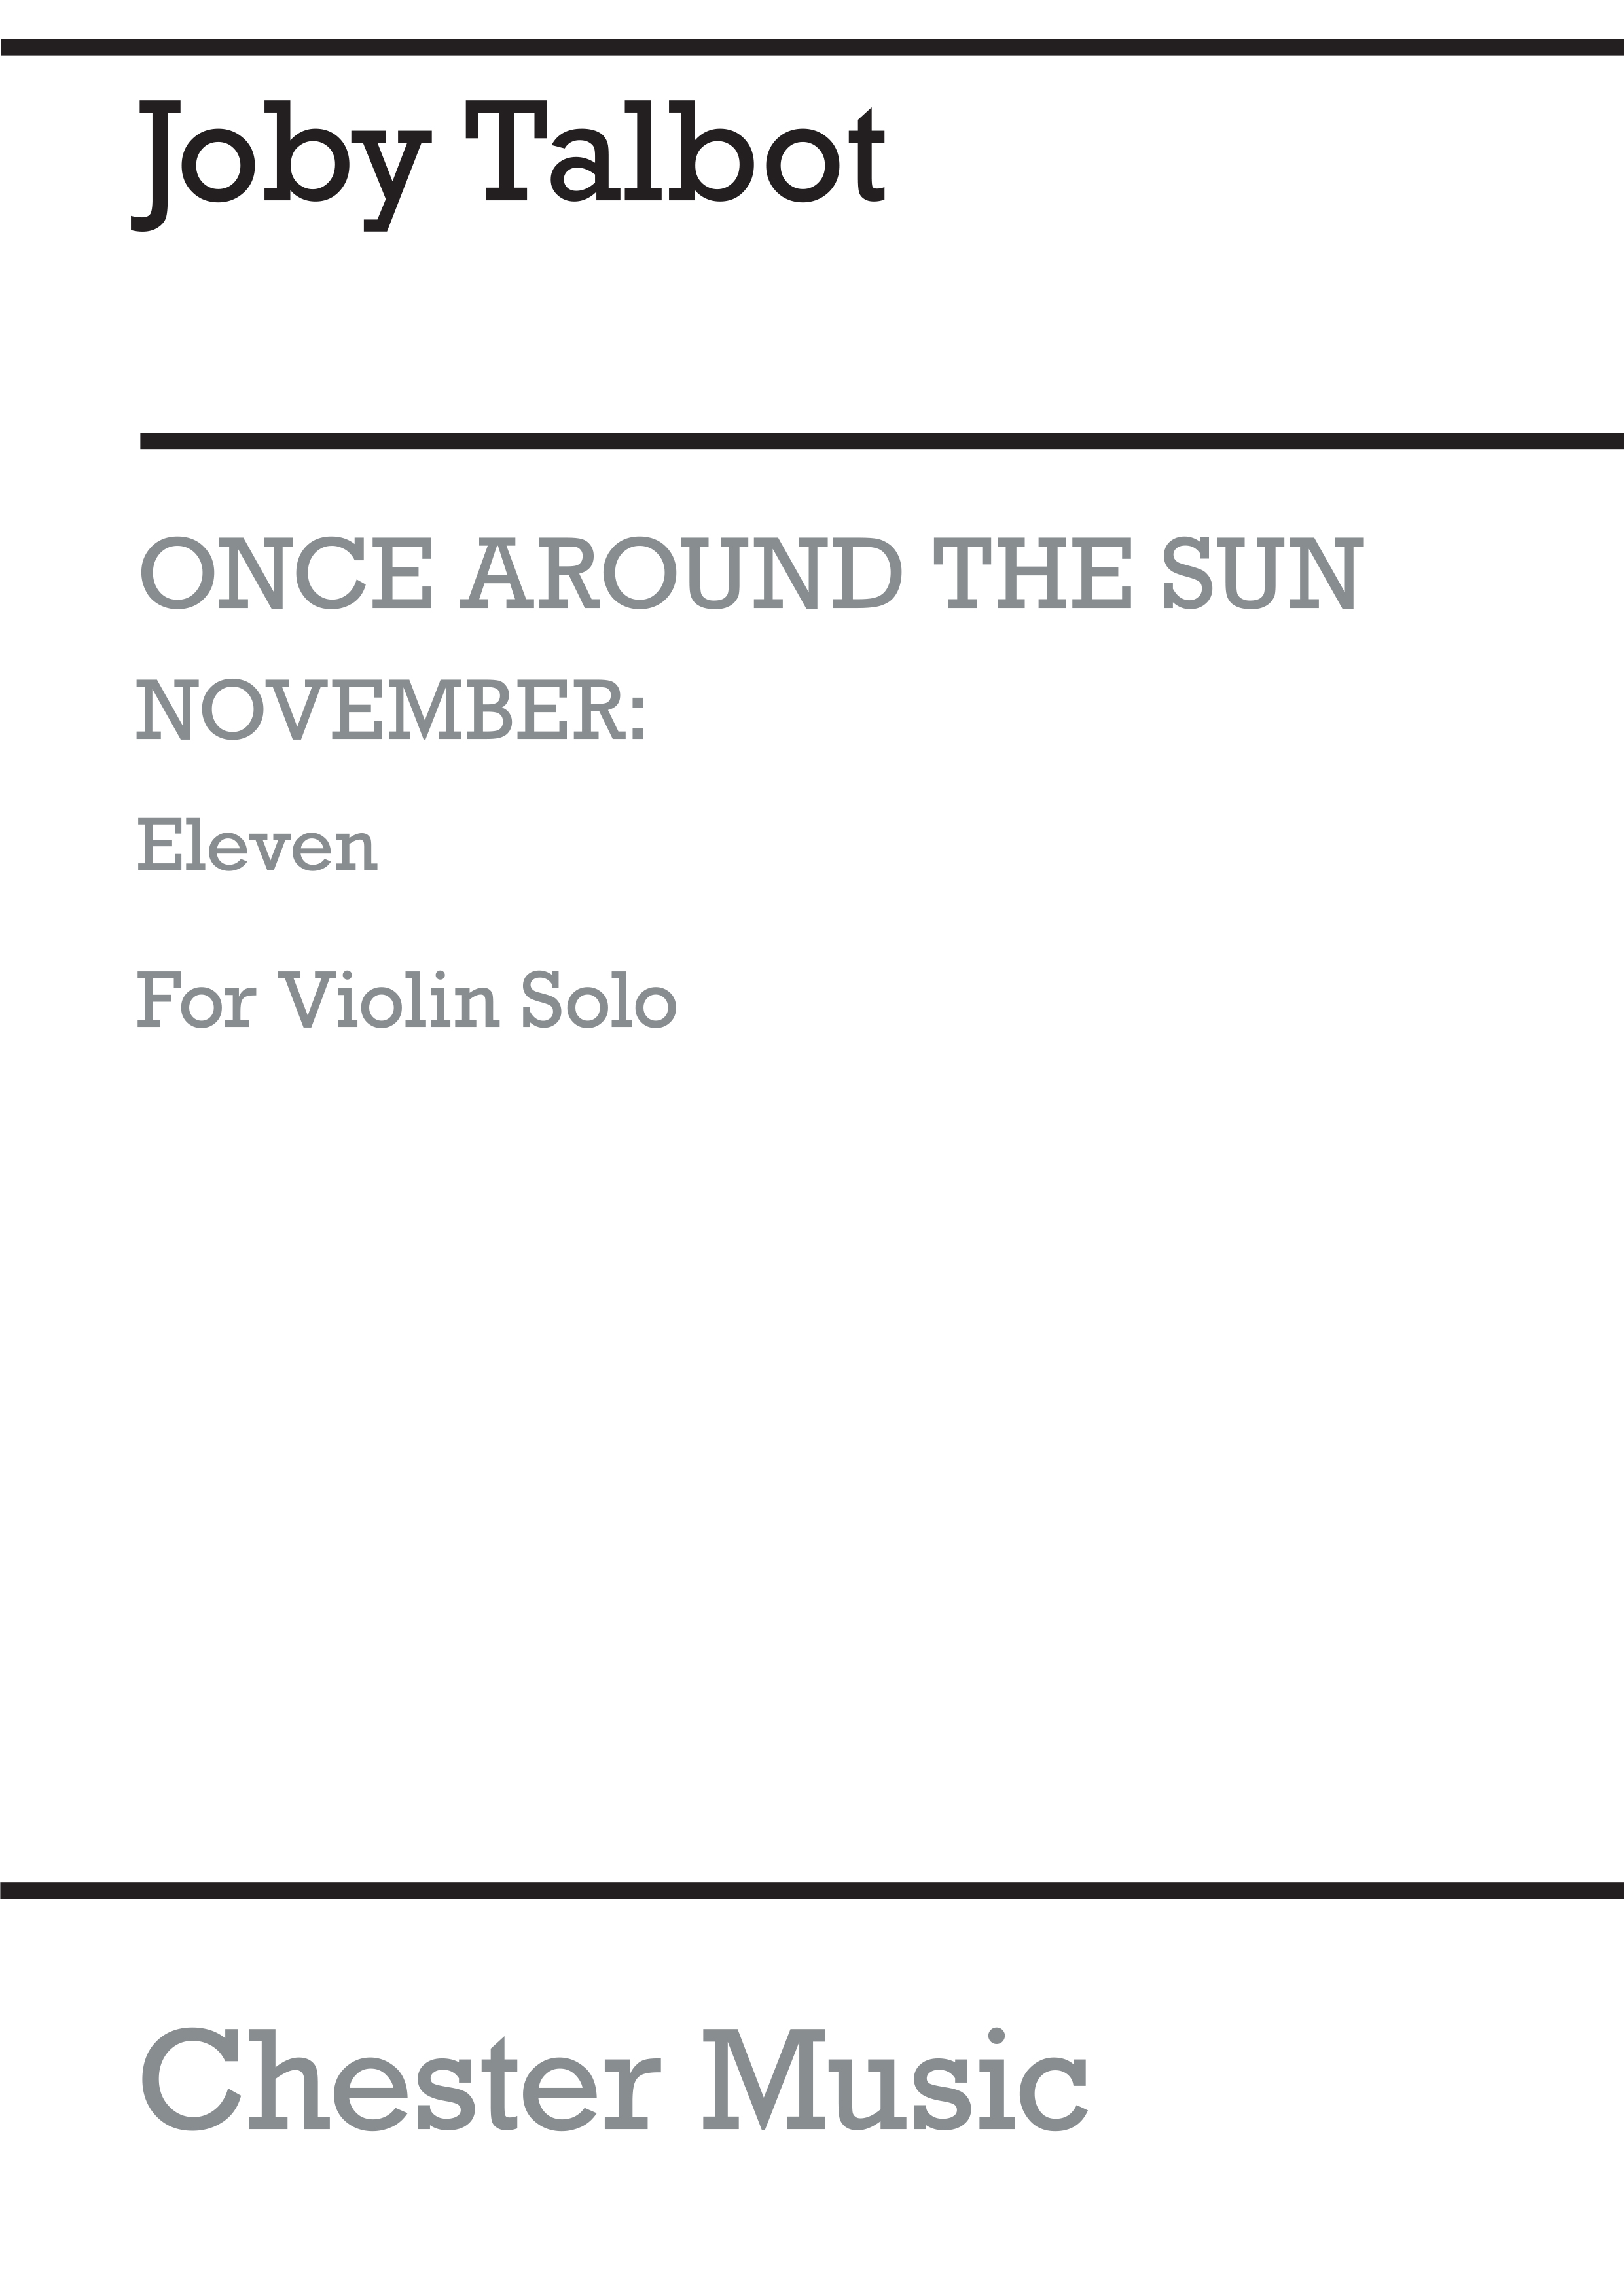 Joby Talbot: November - Eleven: Violin